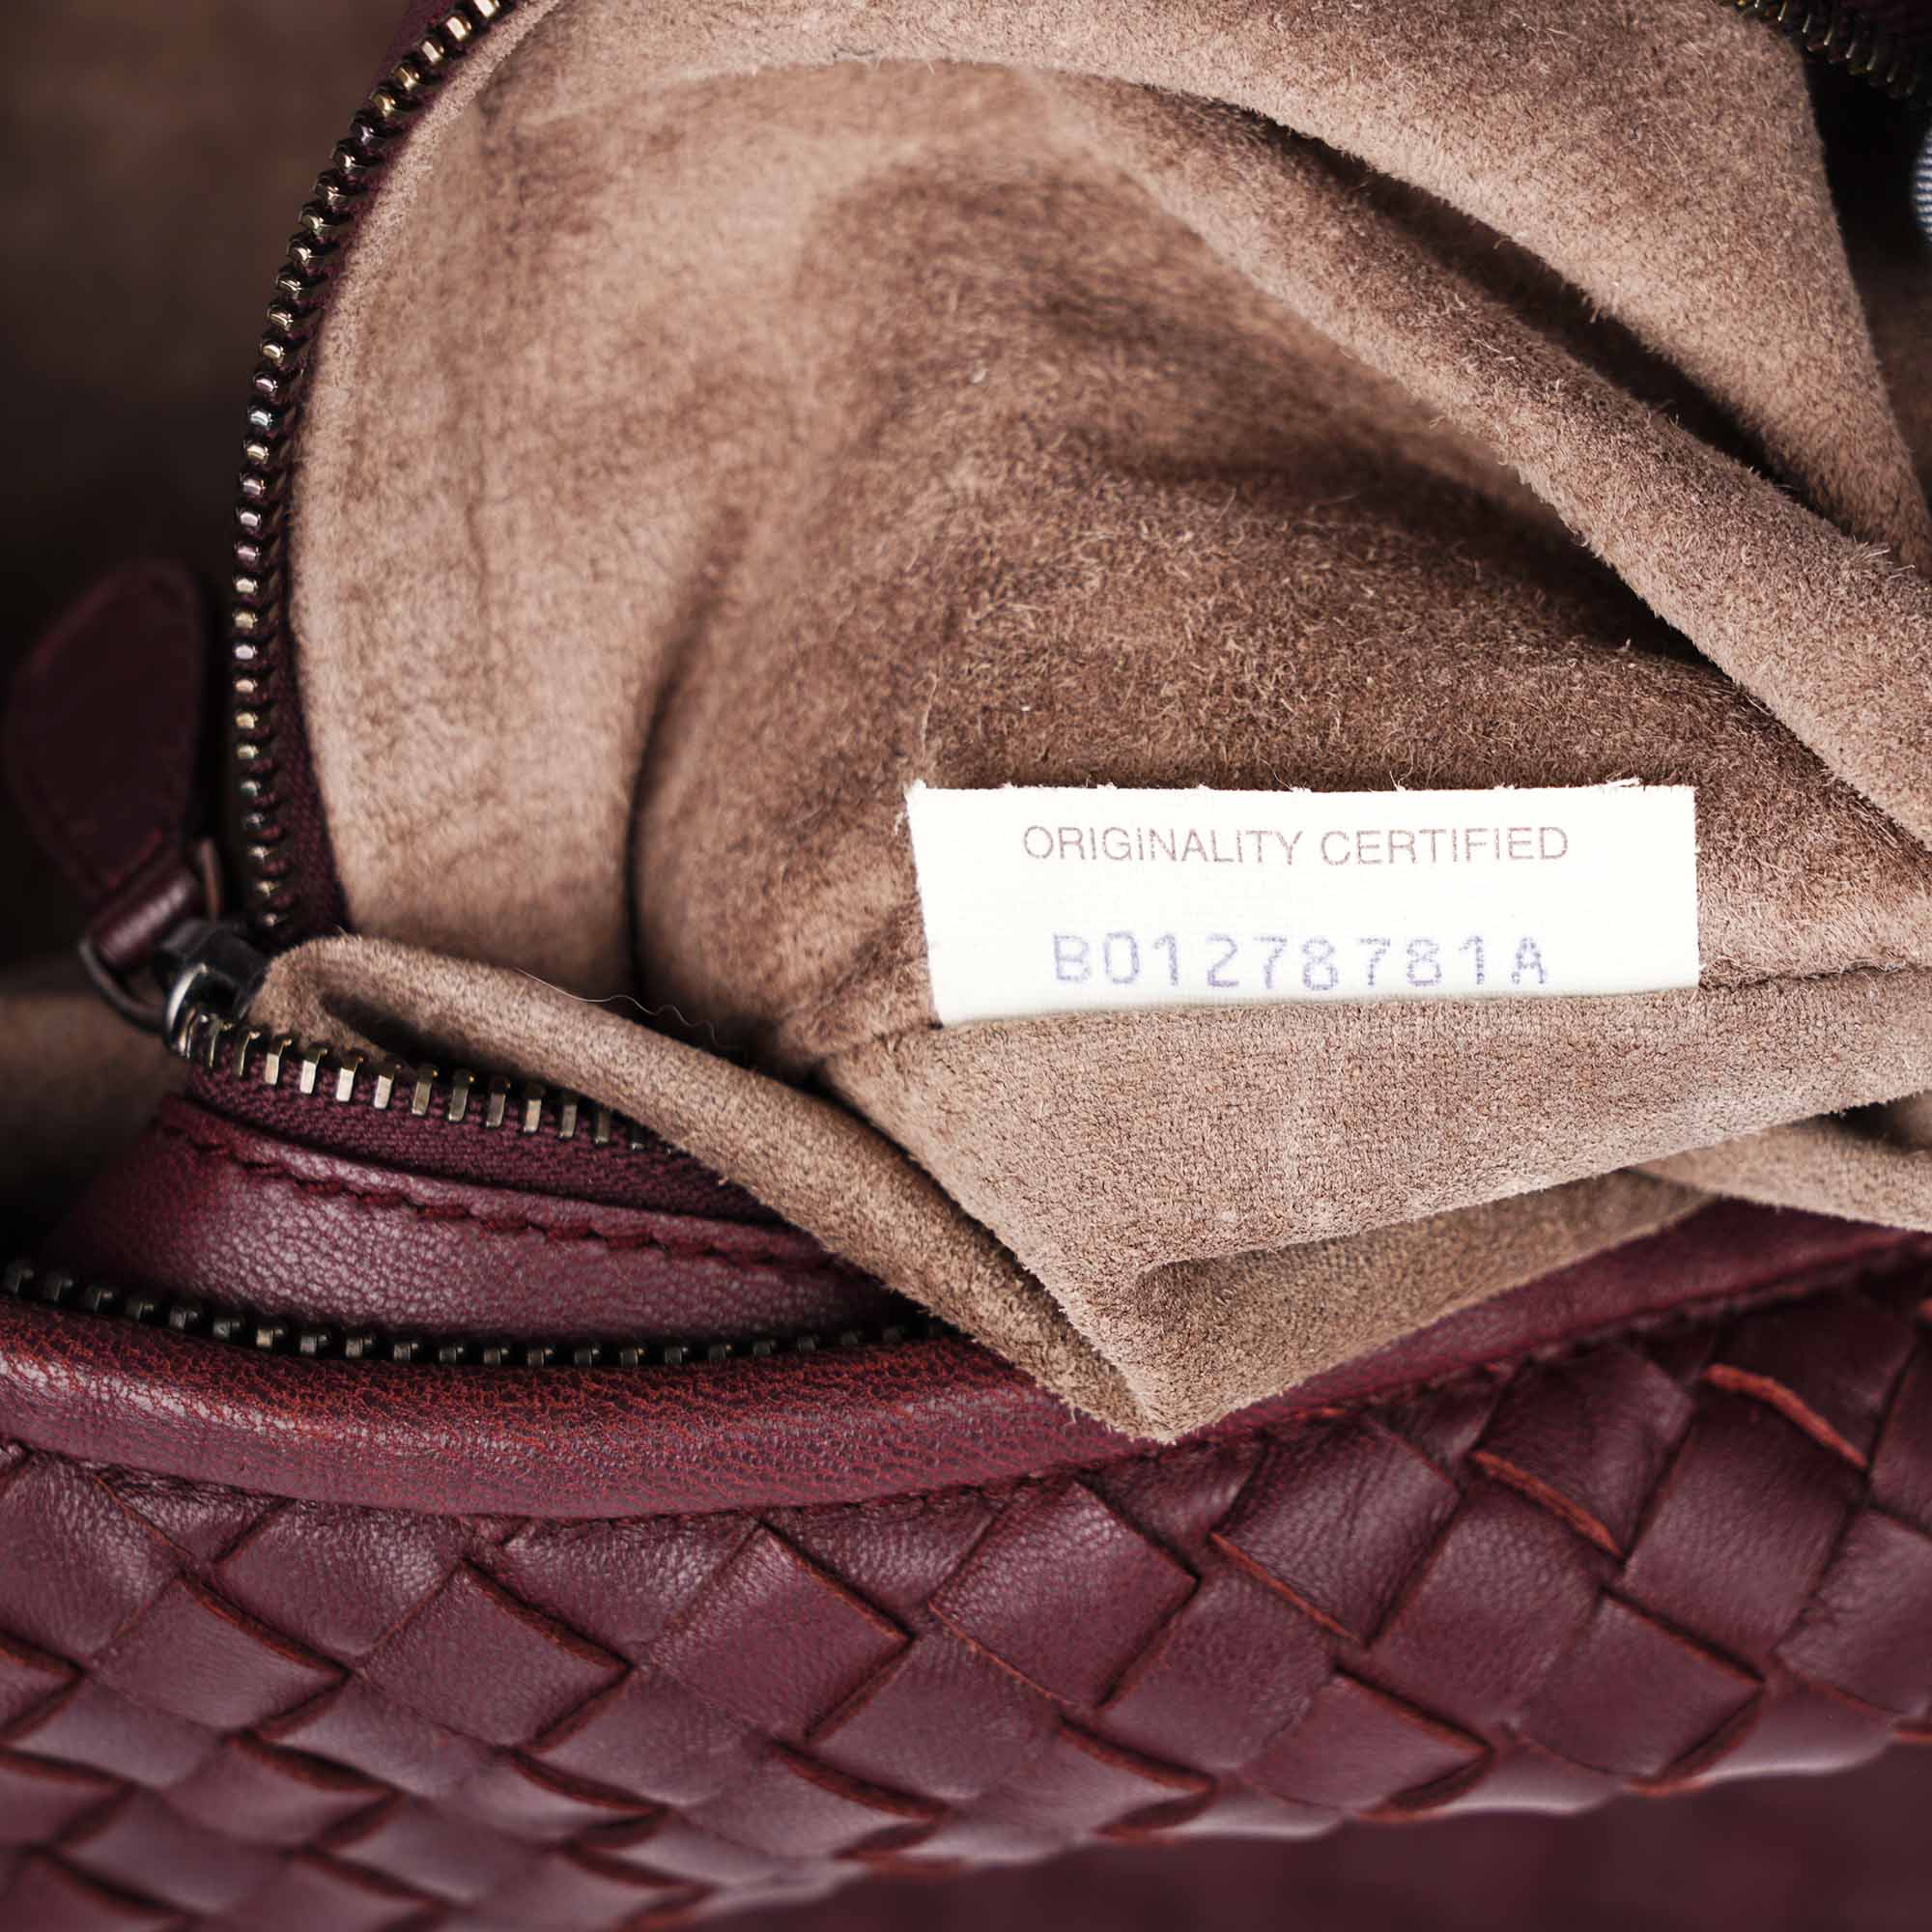 Intrecciatio Large Hobo Bag - BOTTEGA VENETA - Affordable Luxury image